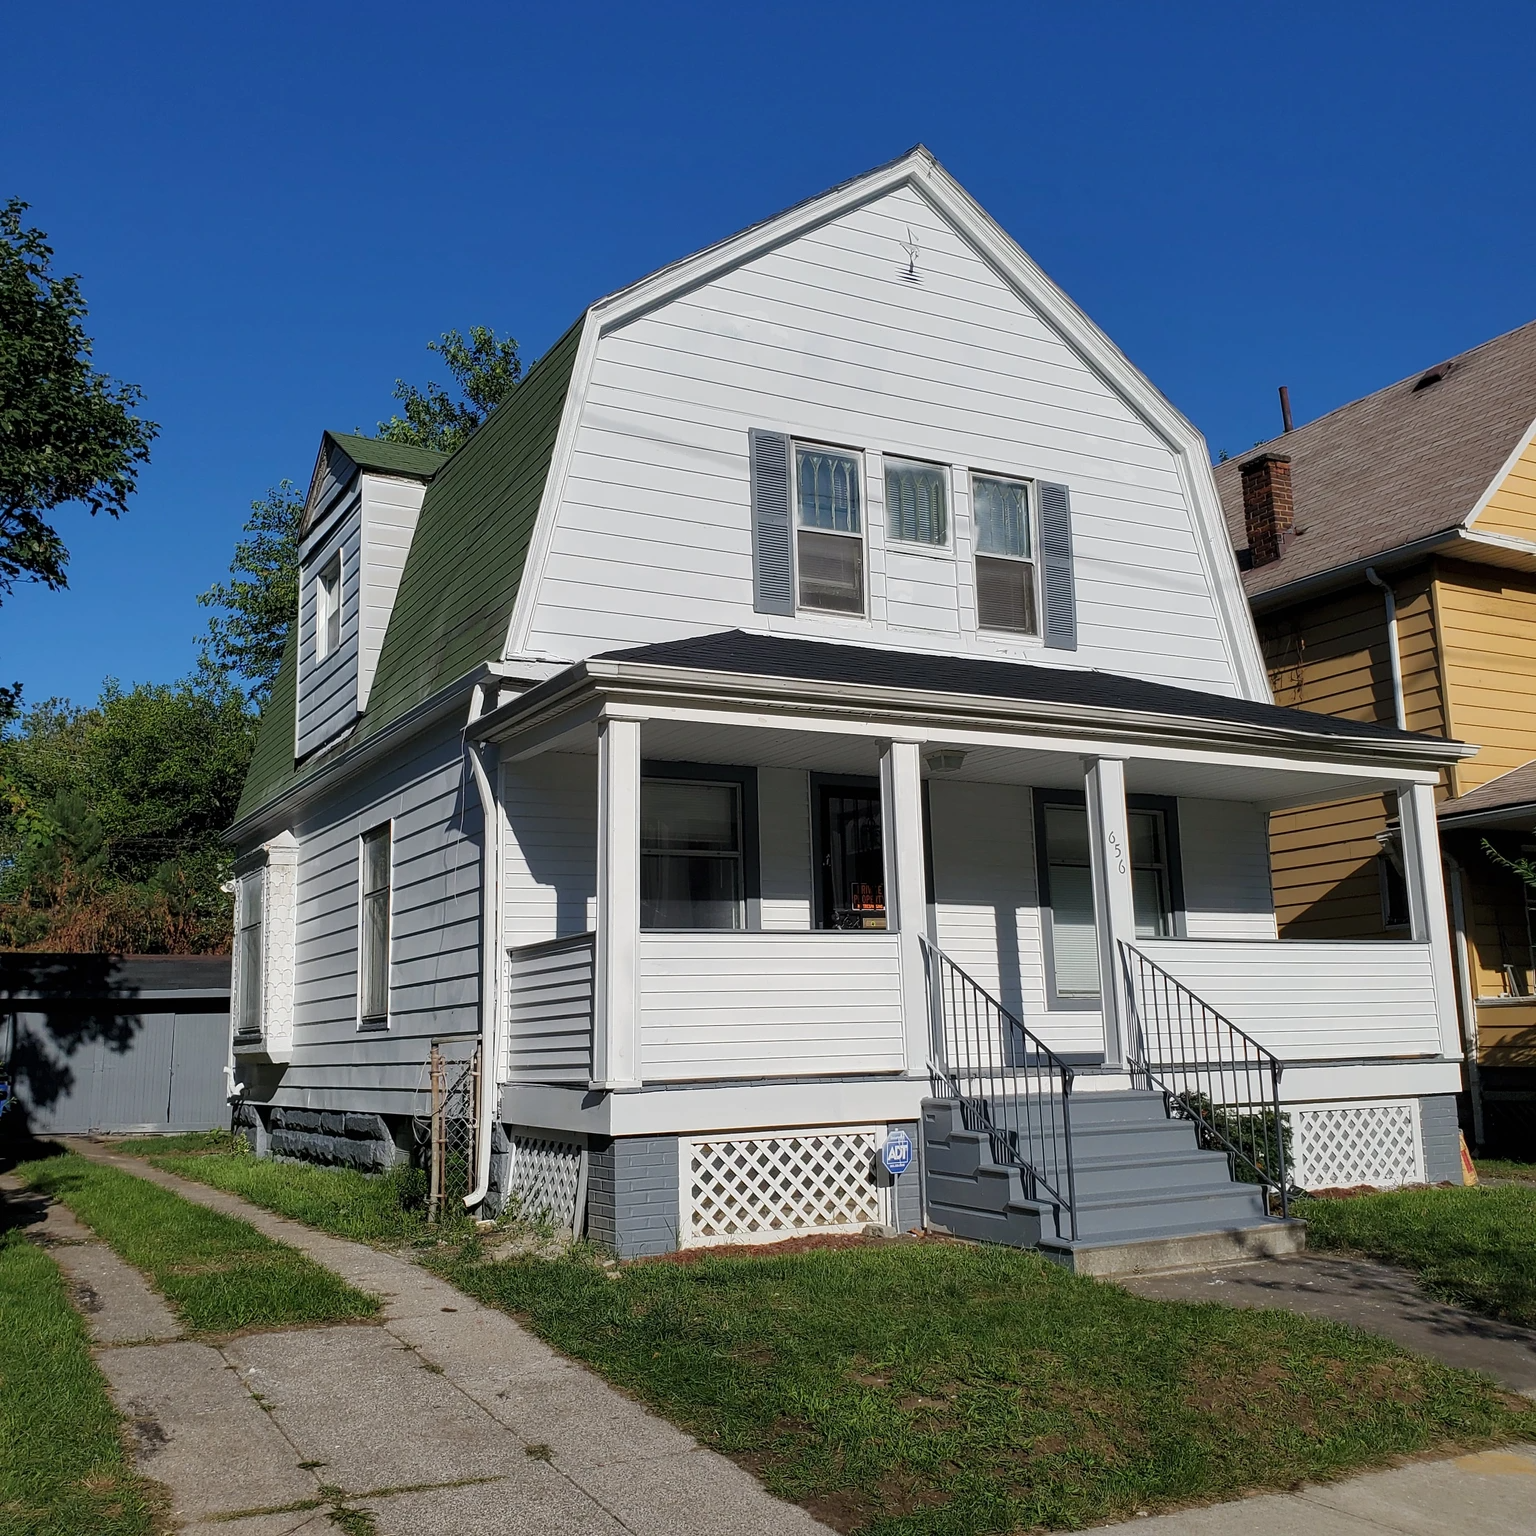 Single Family Home, USA, Cleveland, Ohio, Lofty